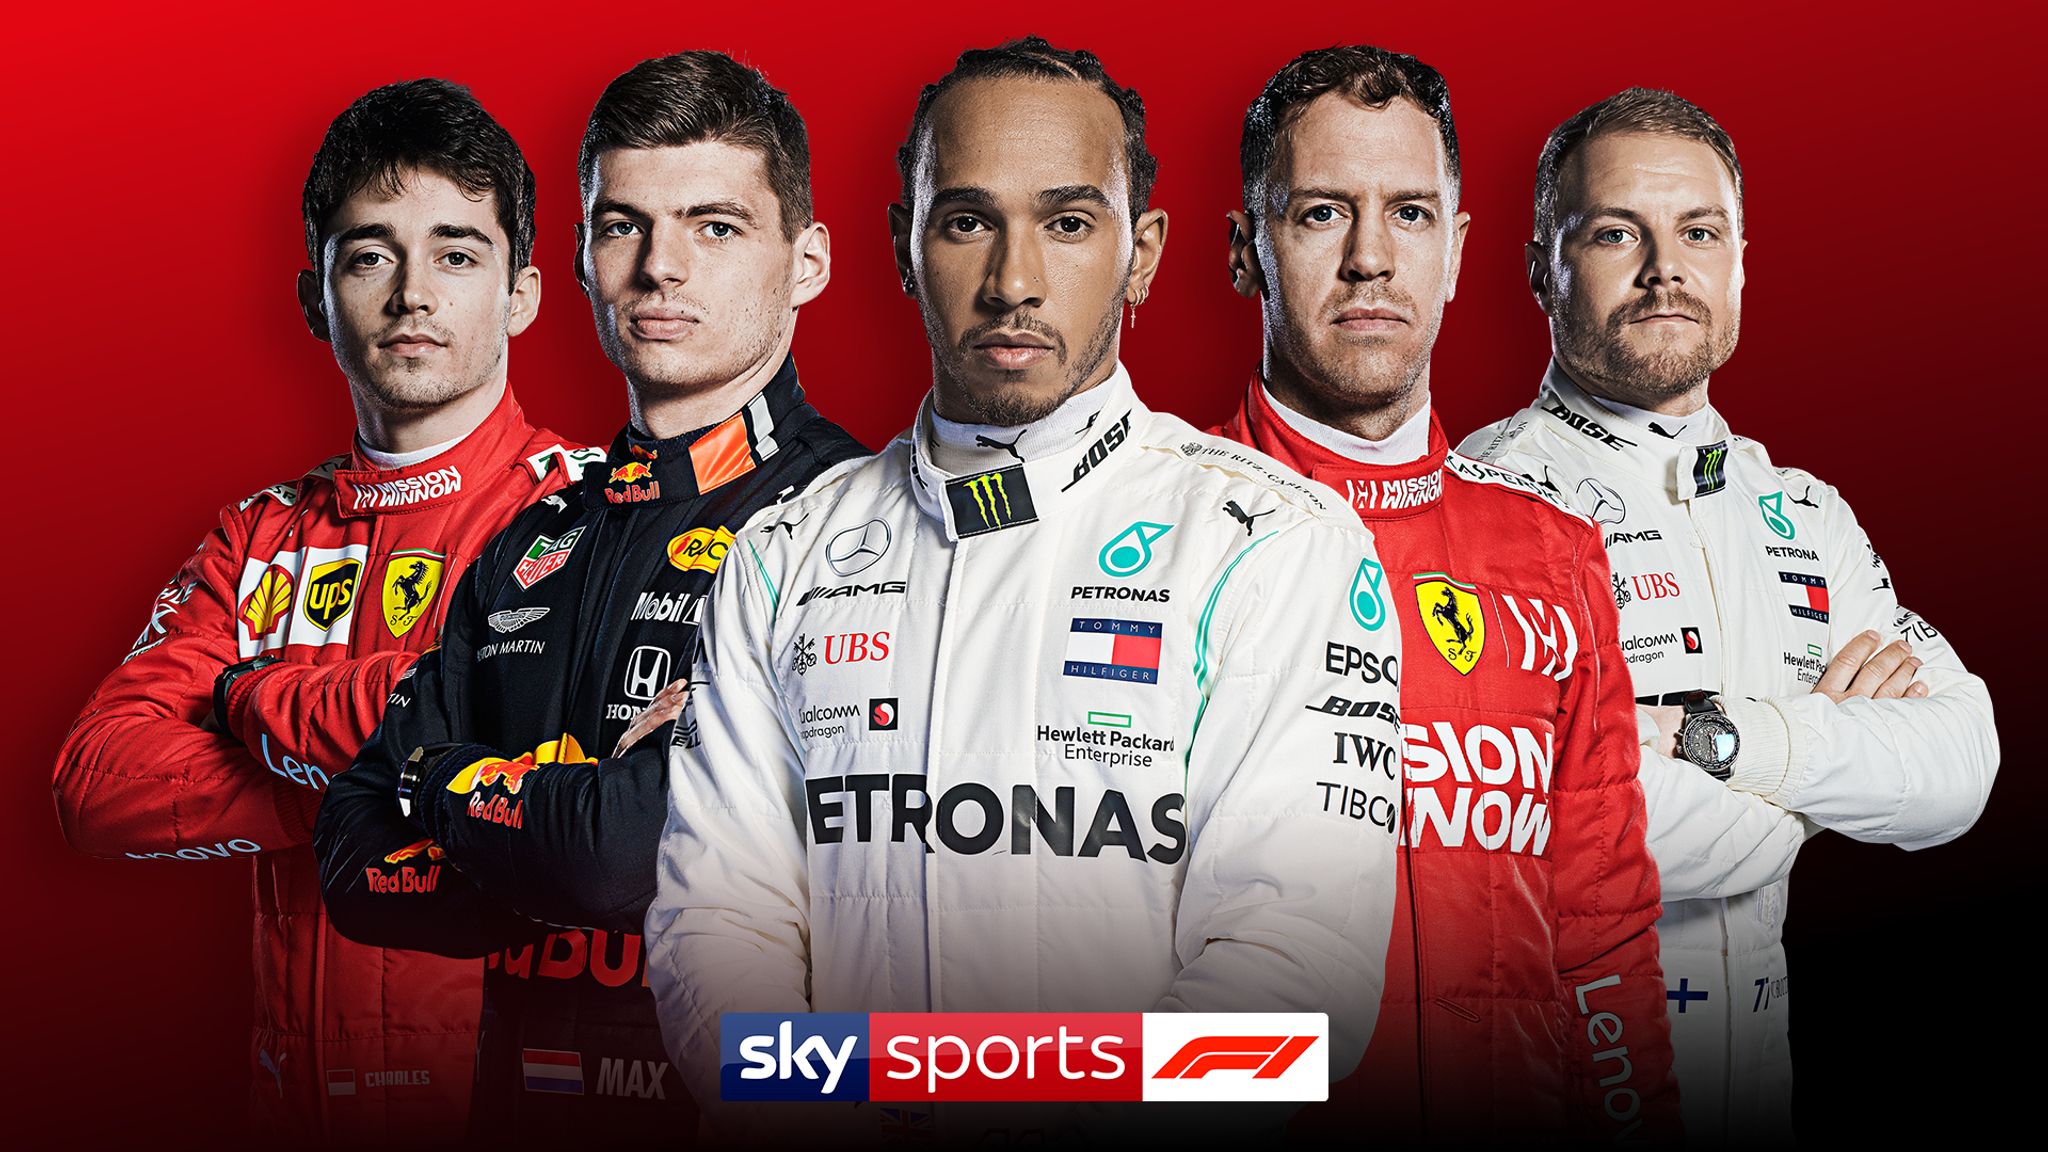 Sky Sports F1 Watch Live Discount, SAVE 30%